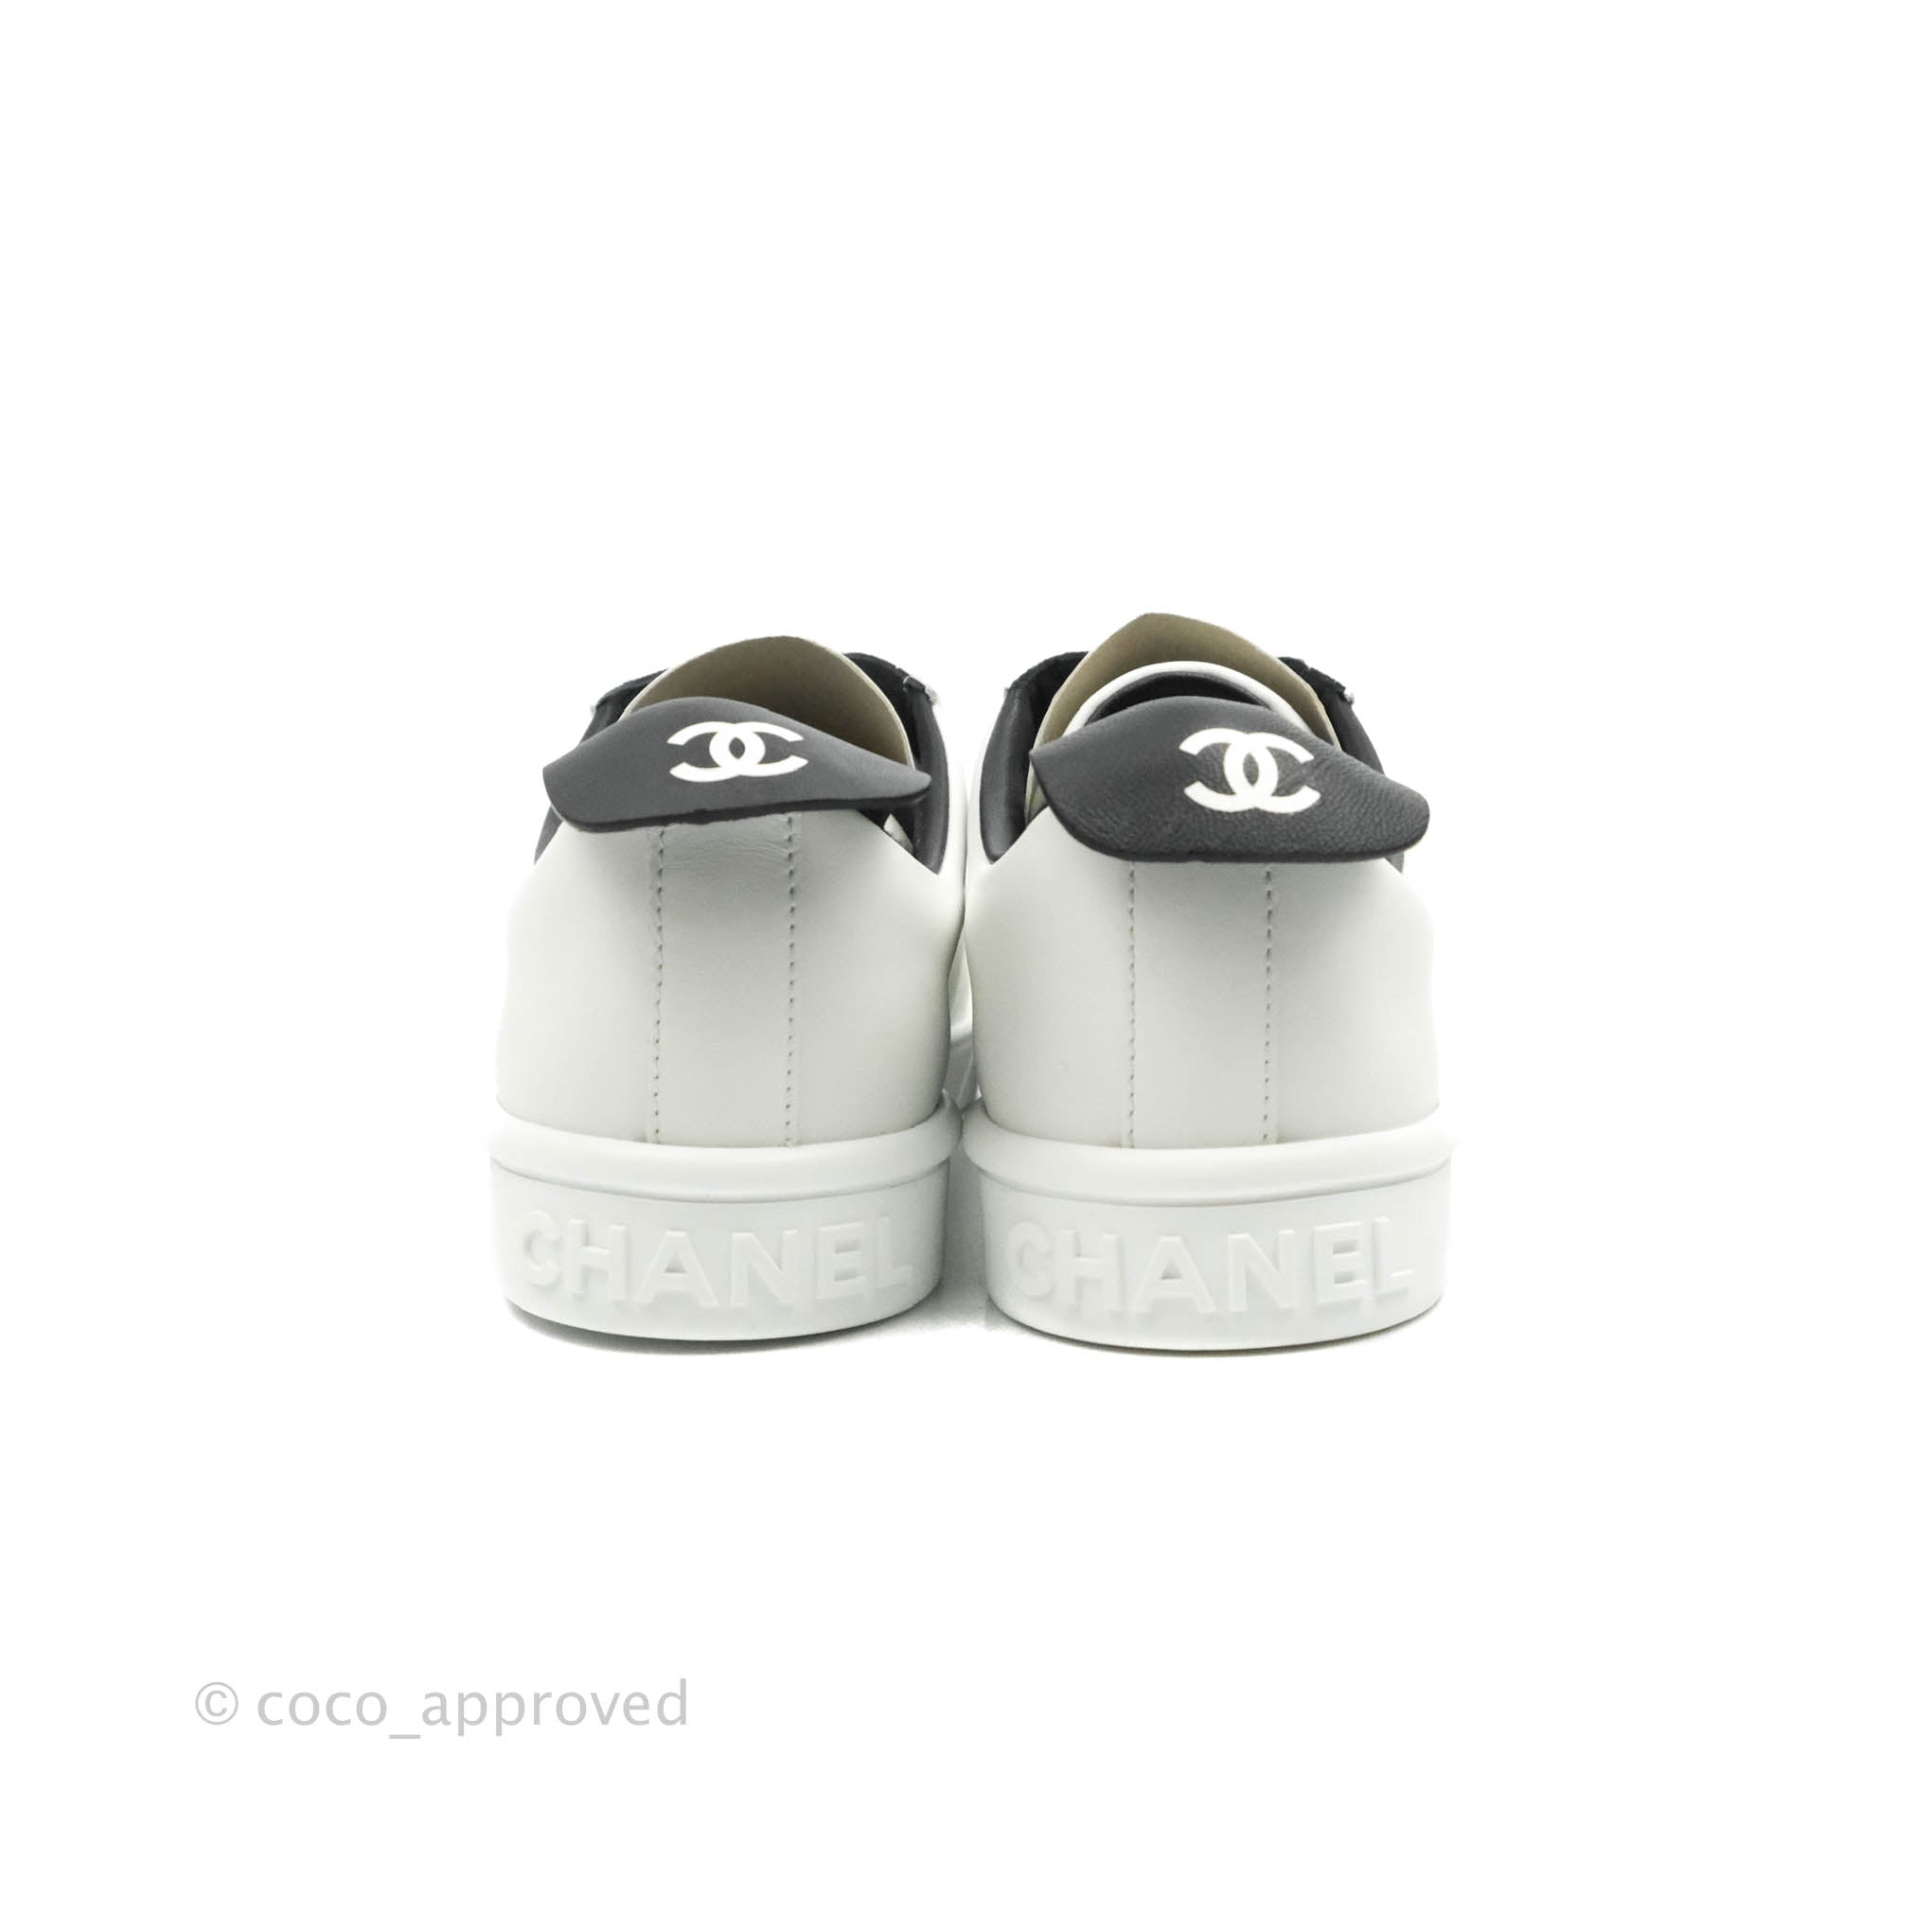 Chanel NIB Black White Ankle Boots